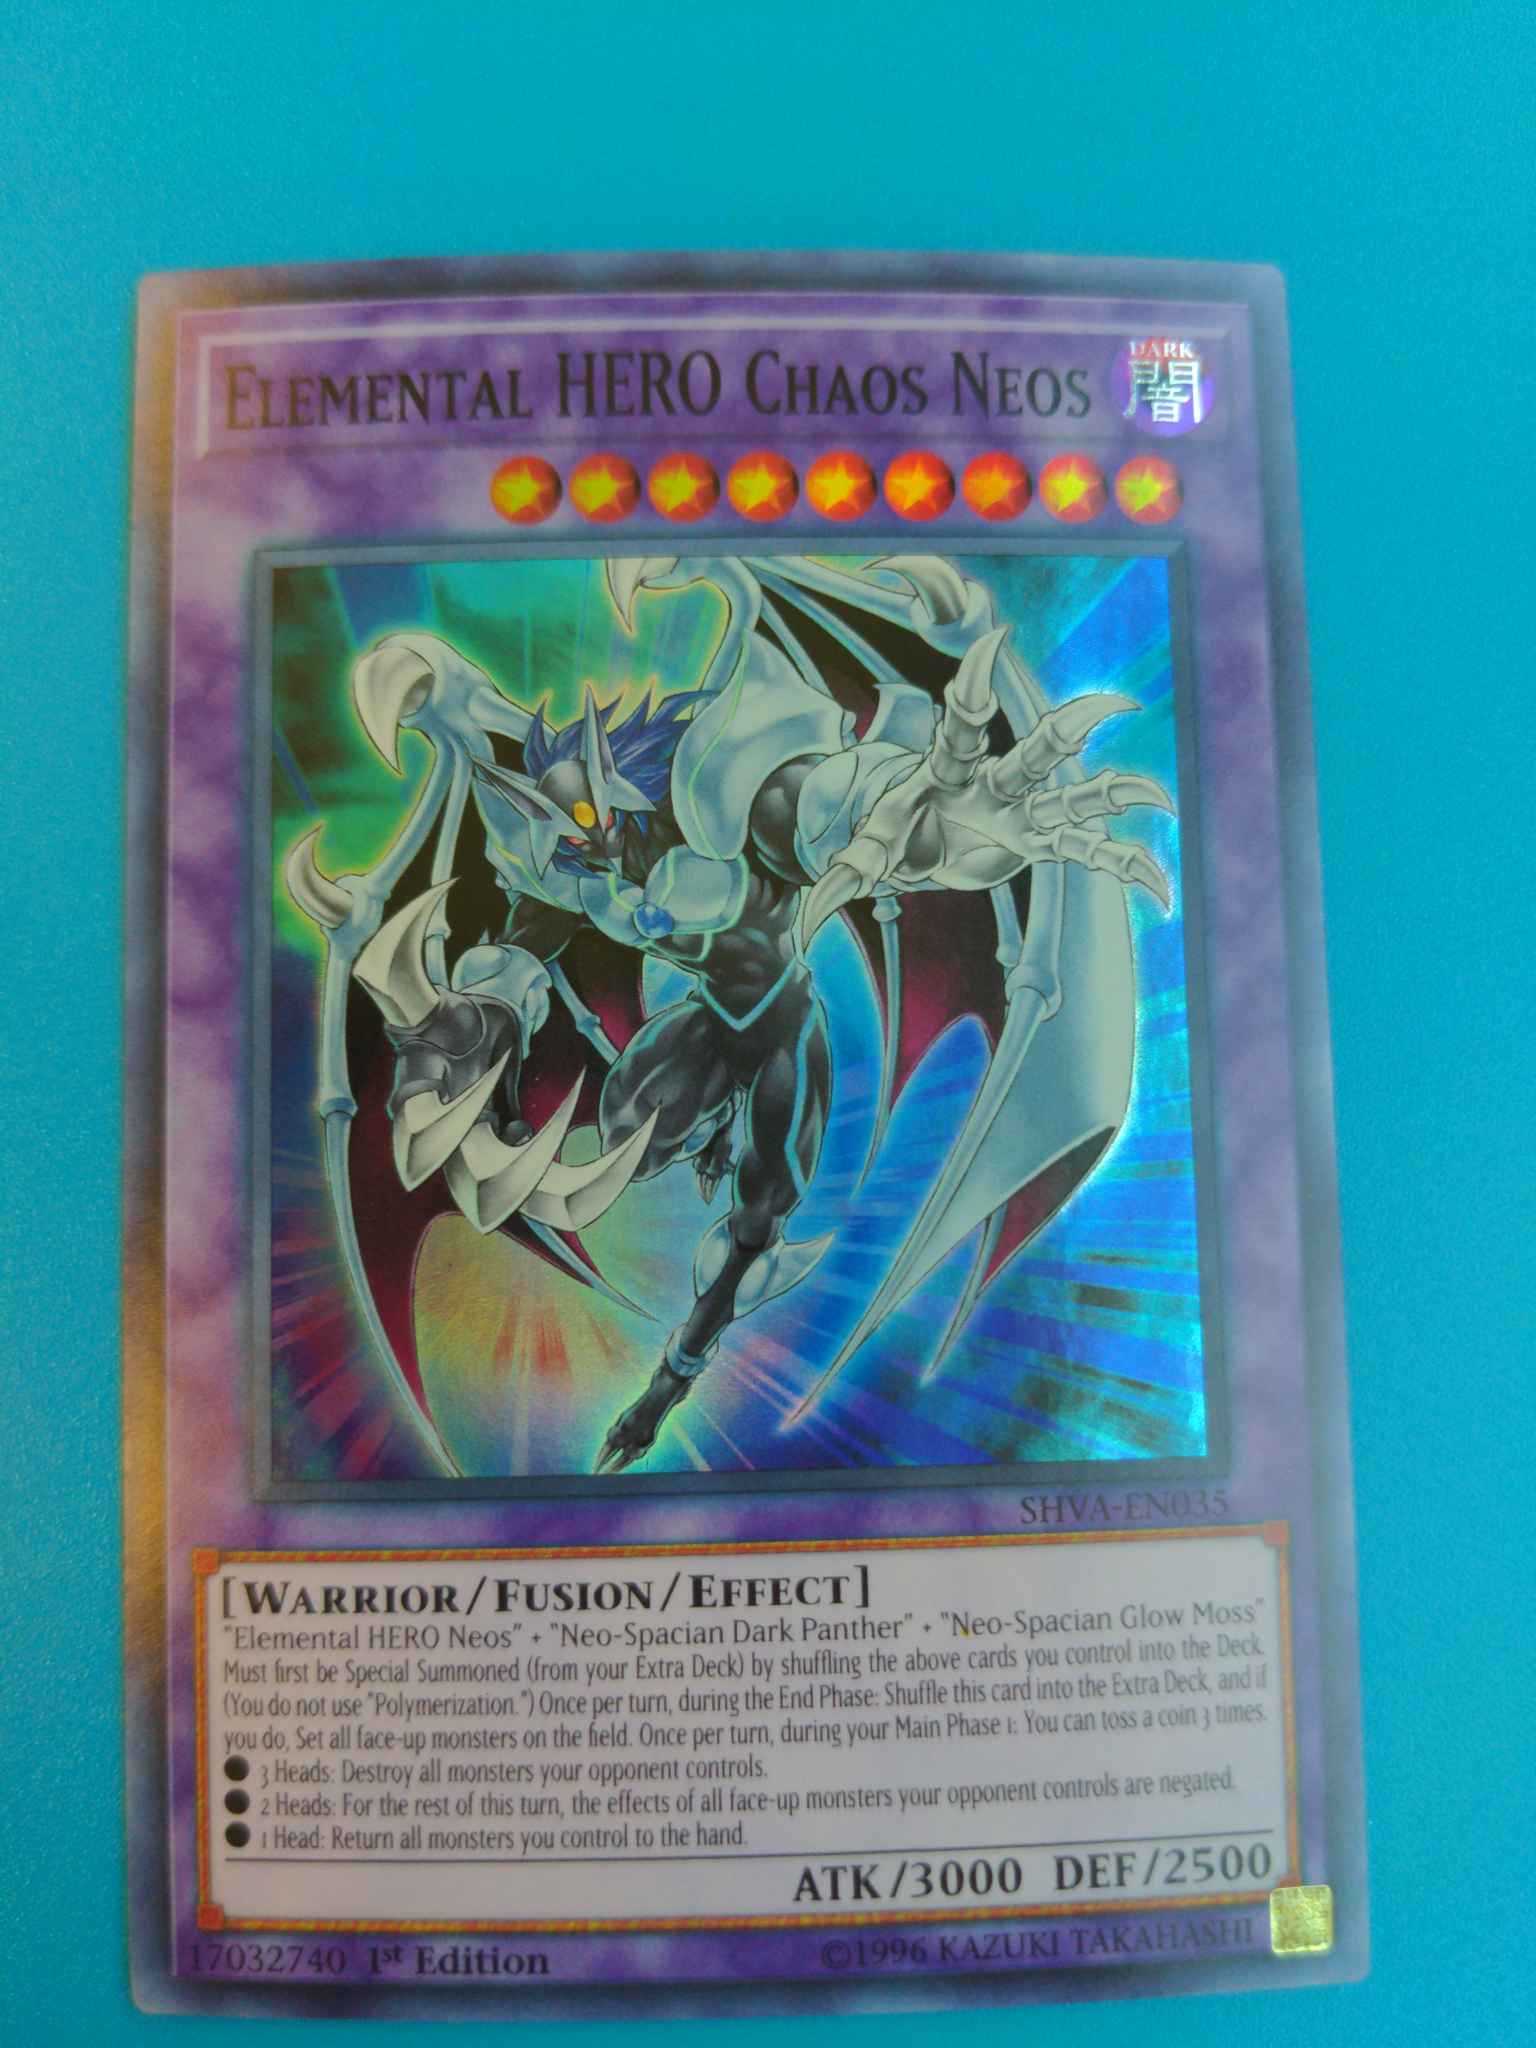 Details about   SHVA-EN035 3 x Elemental HERO Chaos Neos Super Rare 1st Edition YuGiOh NEW